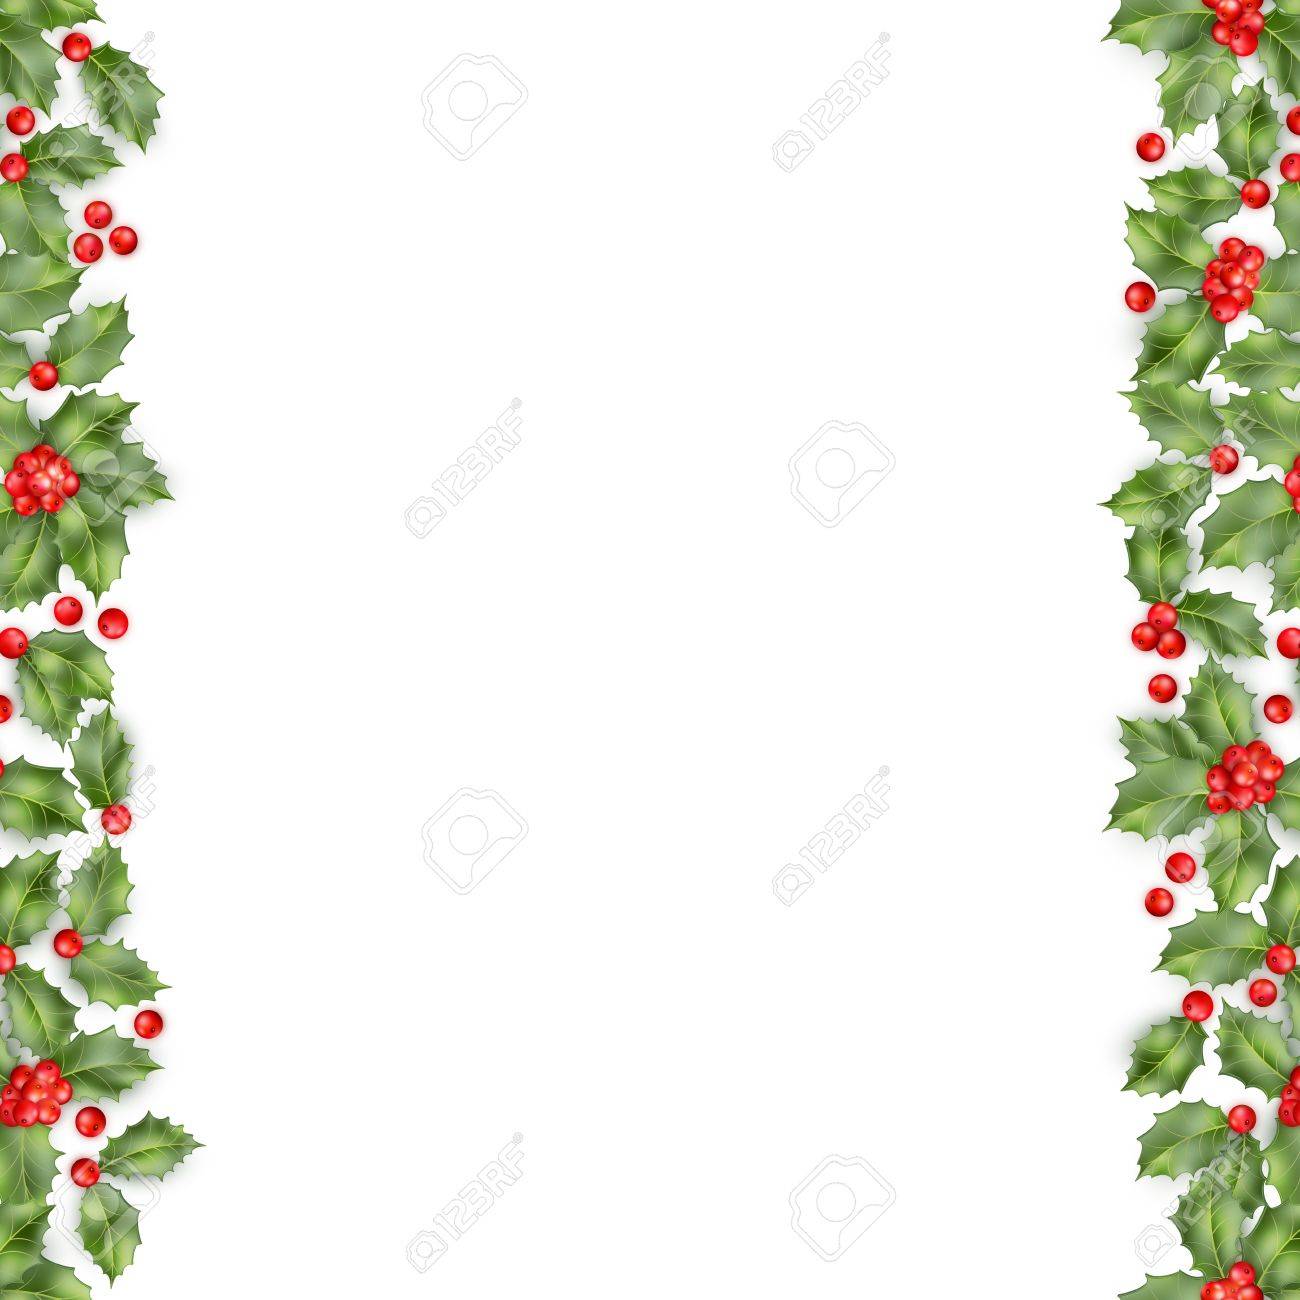 Christmas Holly Berry Border Clipart.